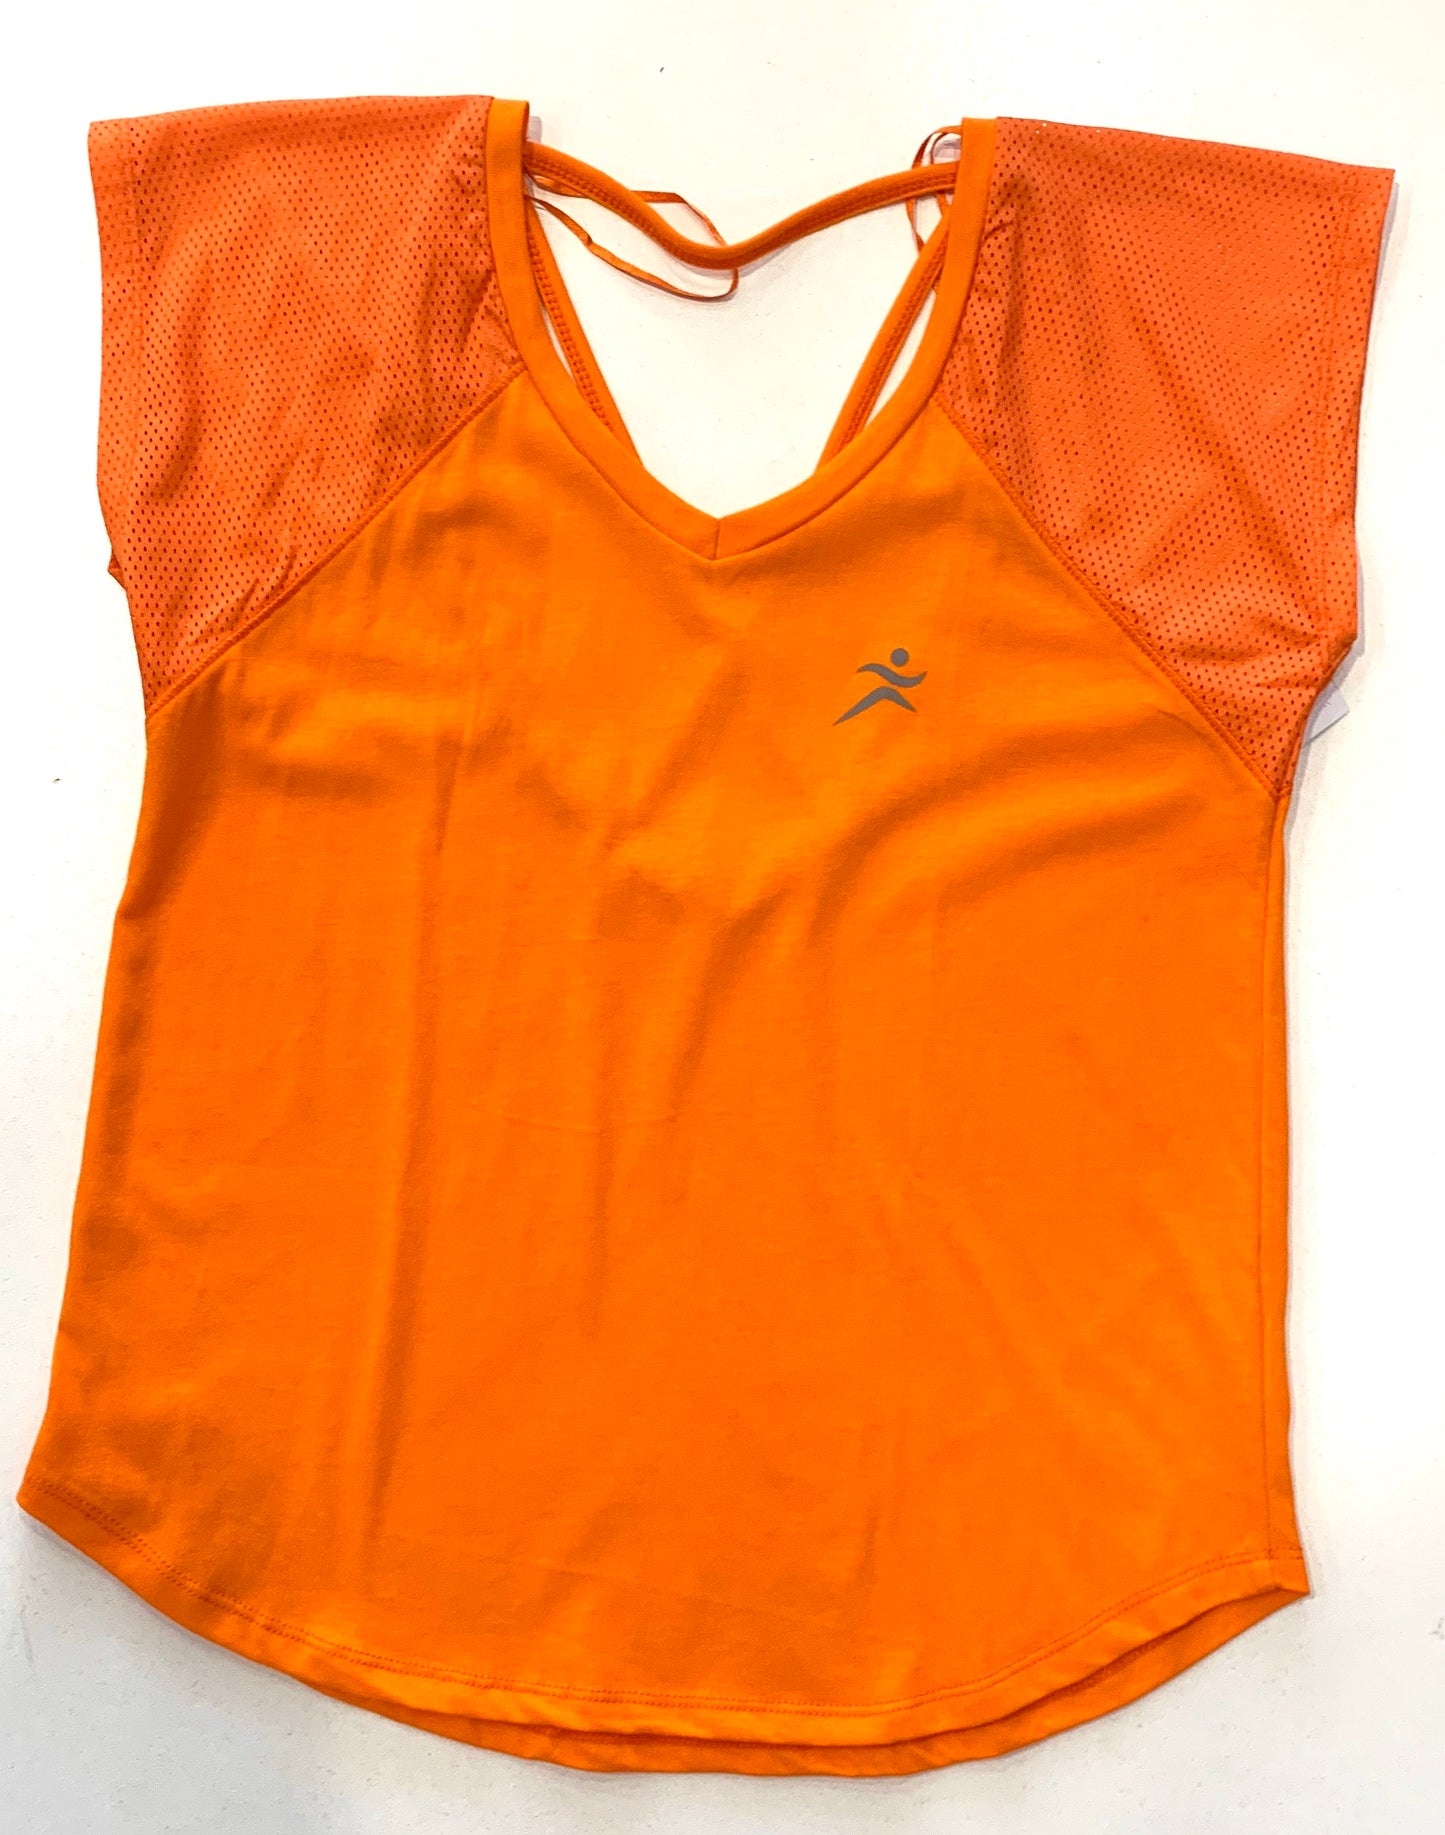 ORANGE Strappy Back Tee Shirt. Sizes XS/8 - 3XL/20